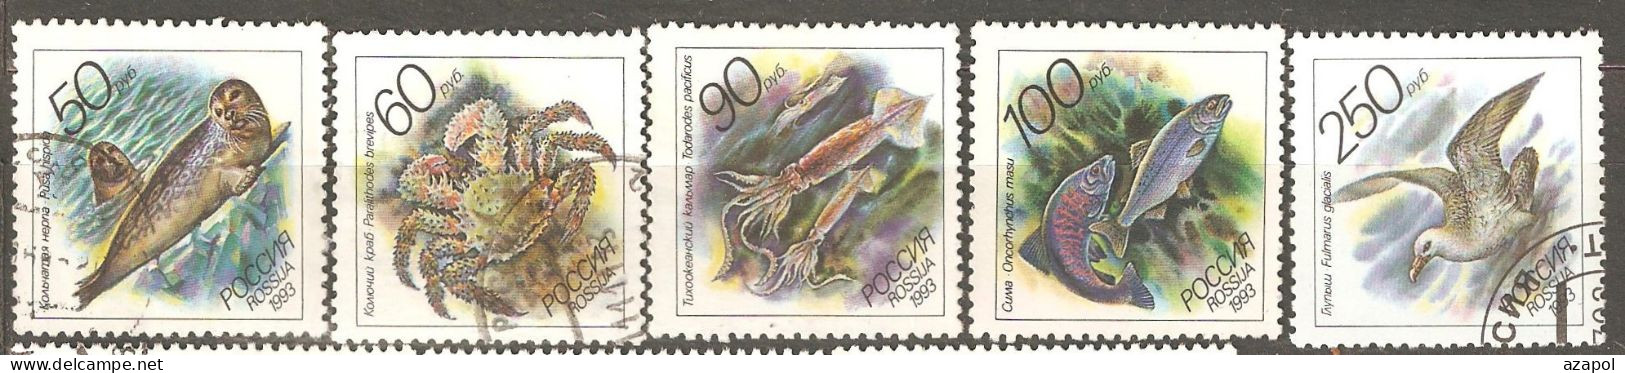 Russia: Full Set Of 5 Used Stamps, Marine Life, 1993, Mi#323-7 - Usados